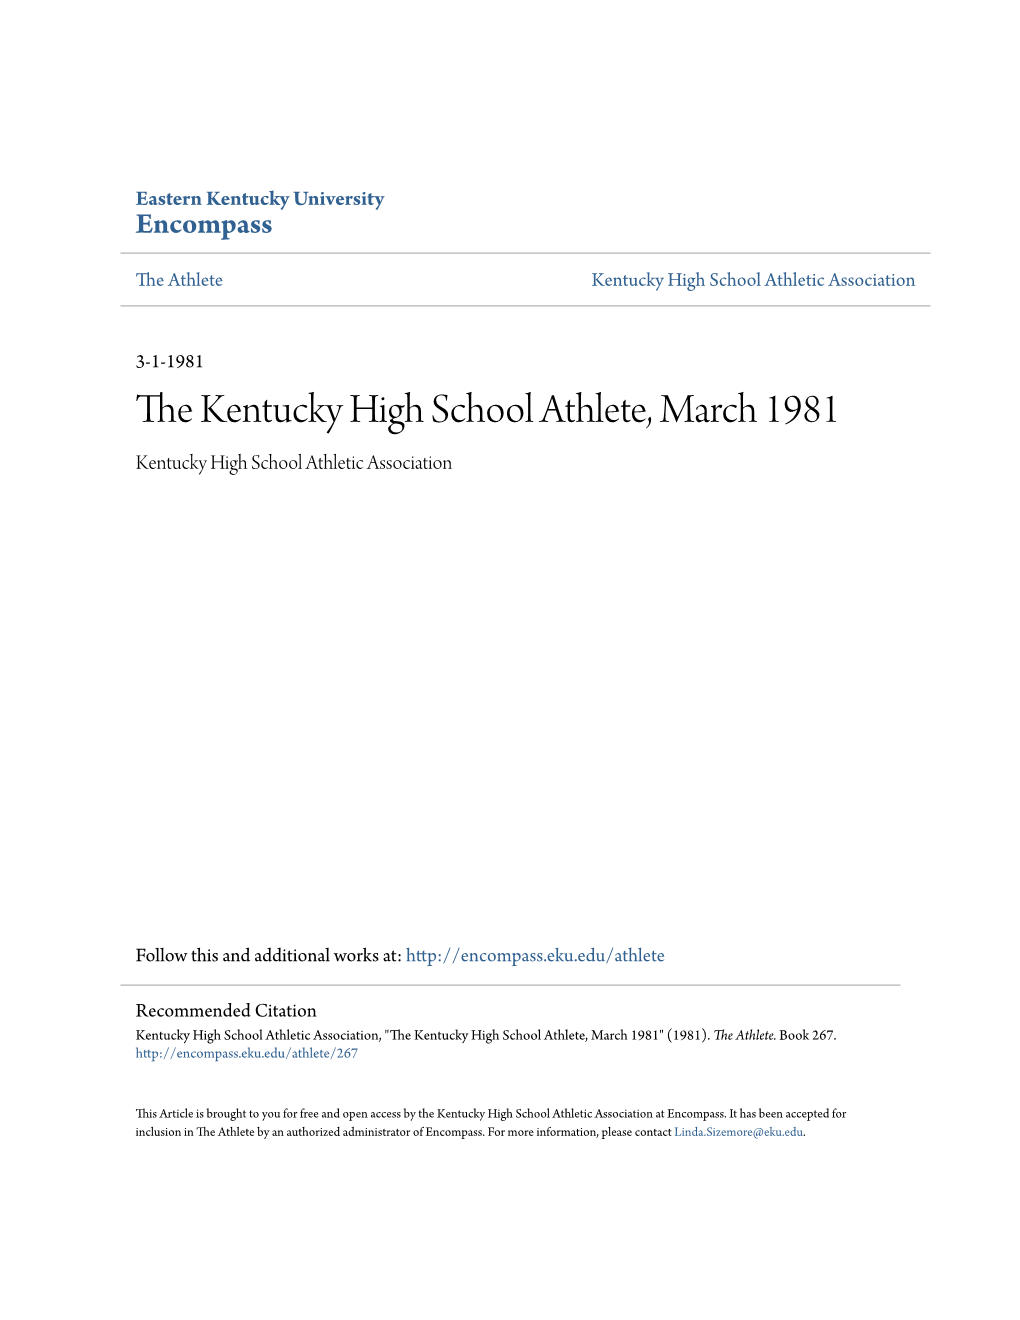 The Kentucky High School Athlete, March 1981 Kentucky High School Athletic Association